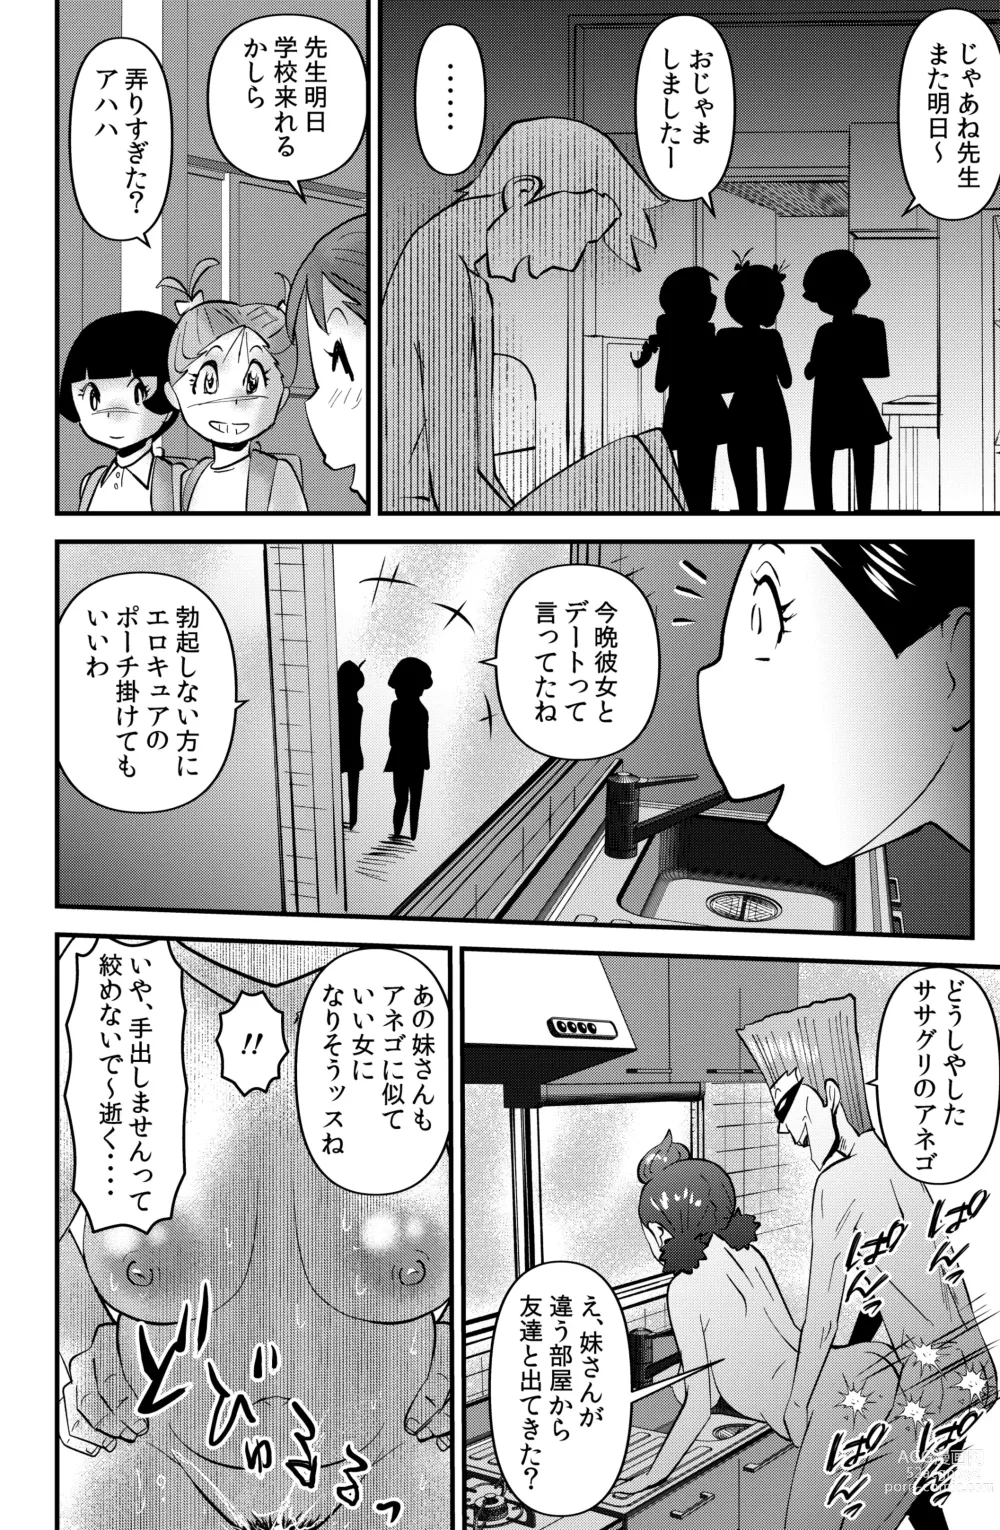 Page 6 of doujinshi Sasaguri-san Chi no Wareme-chan